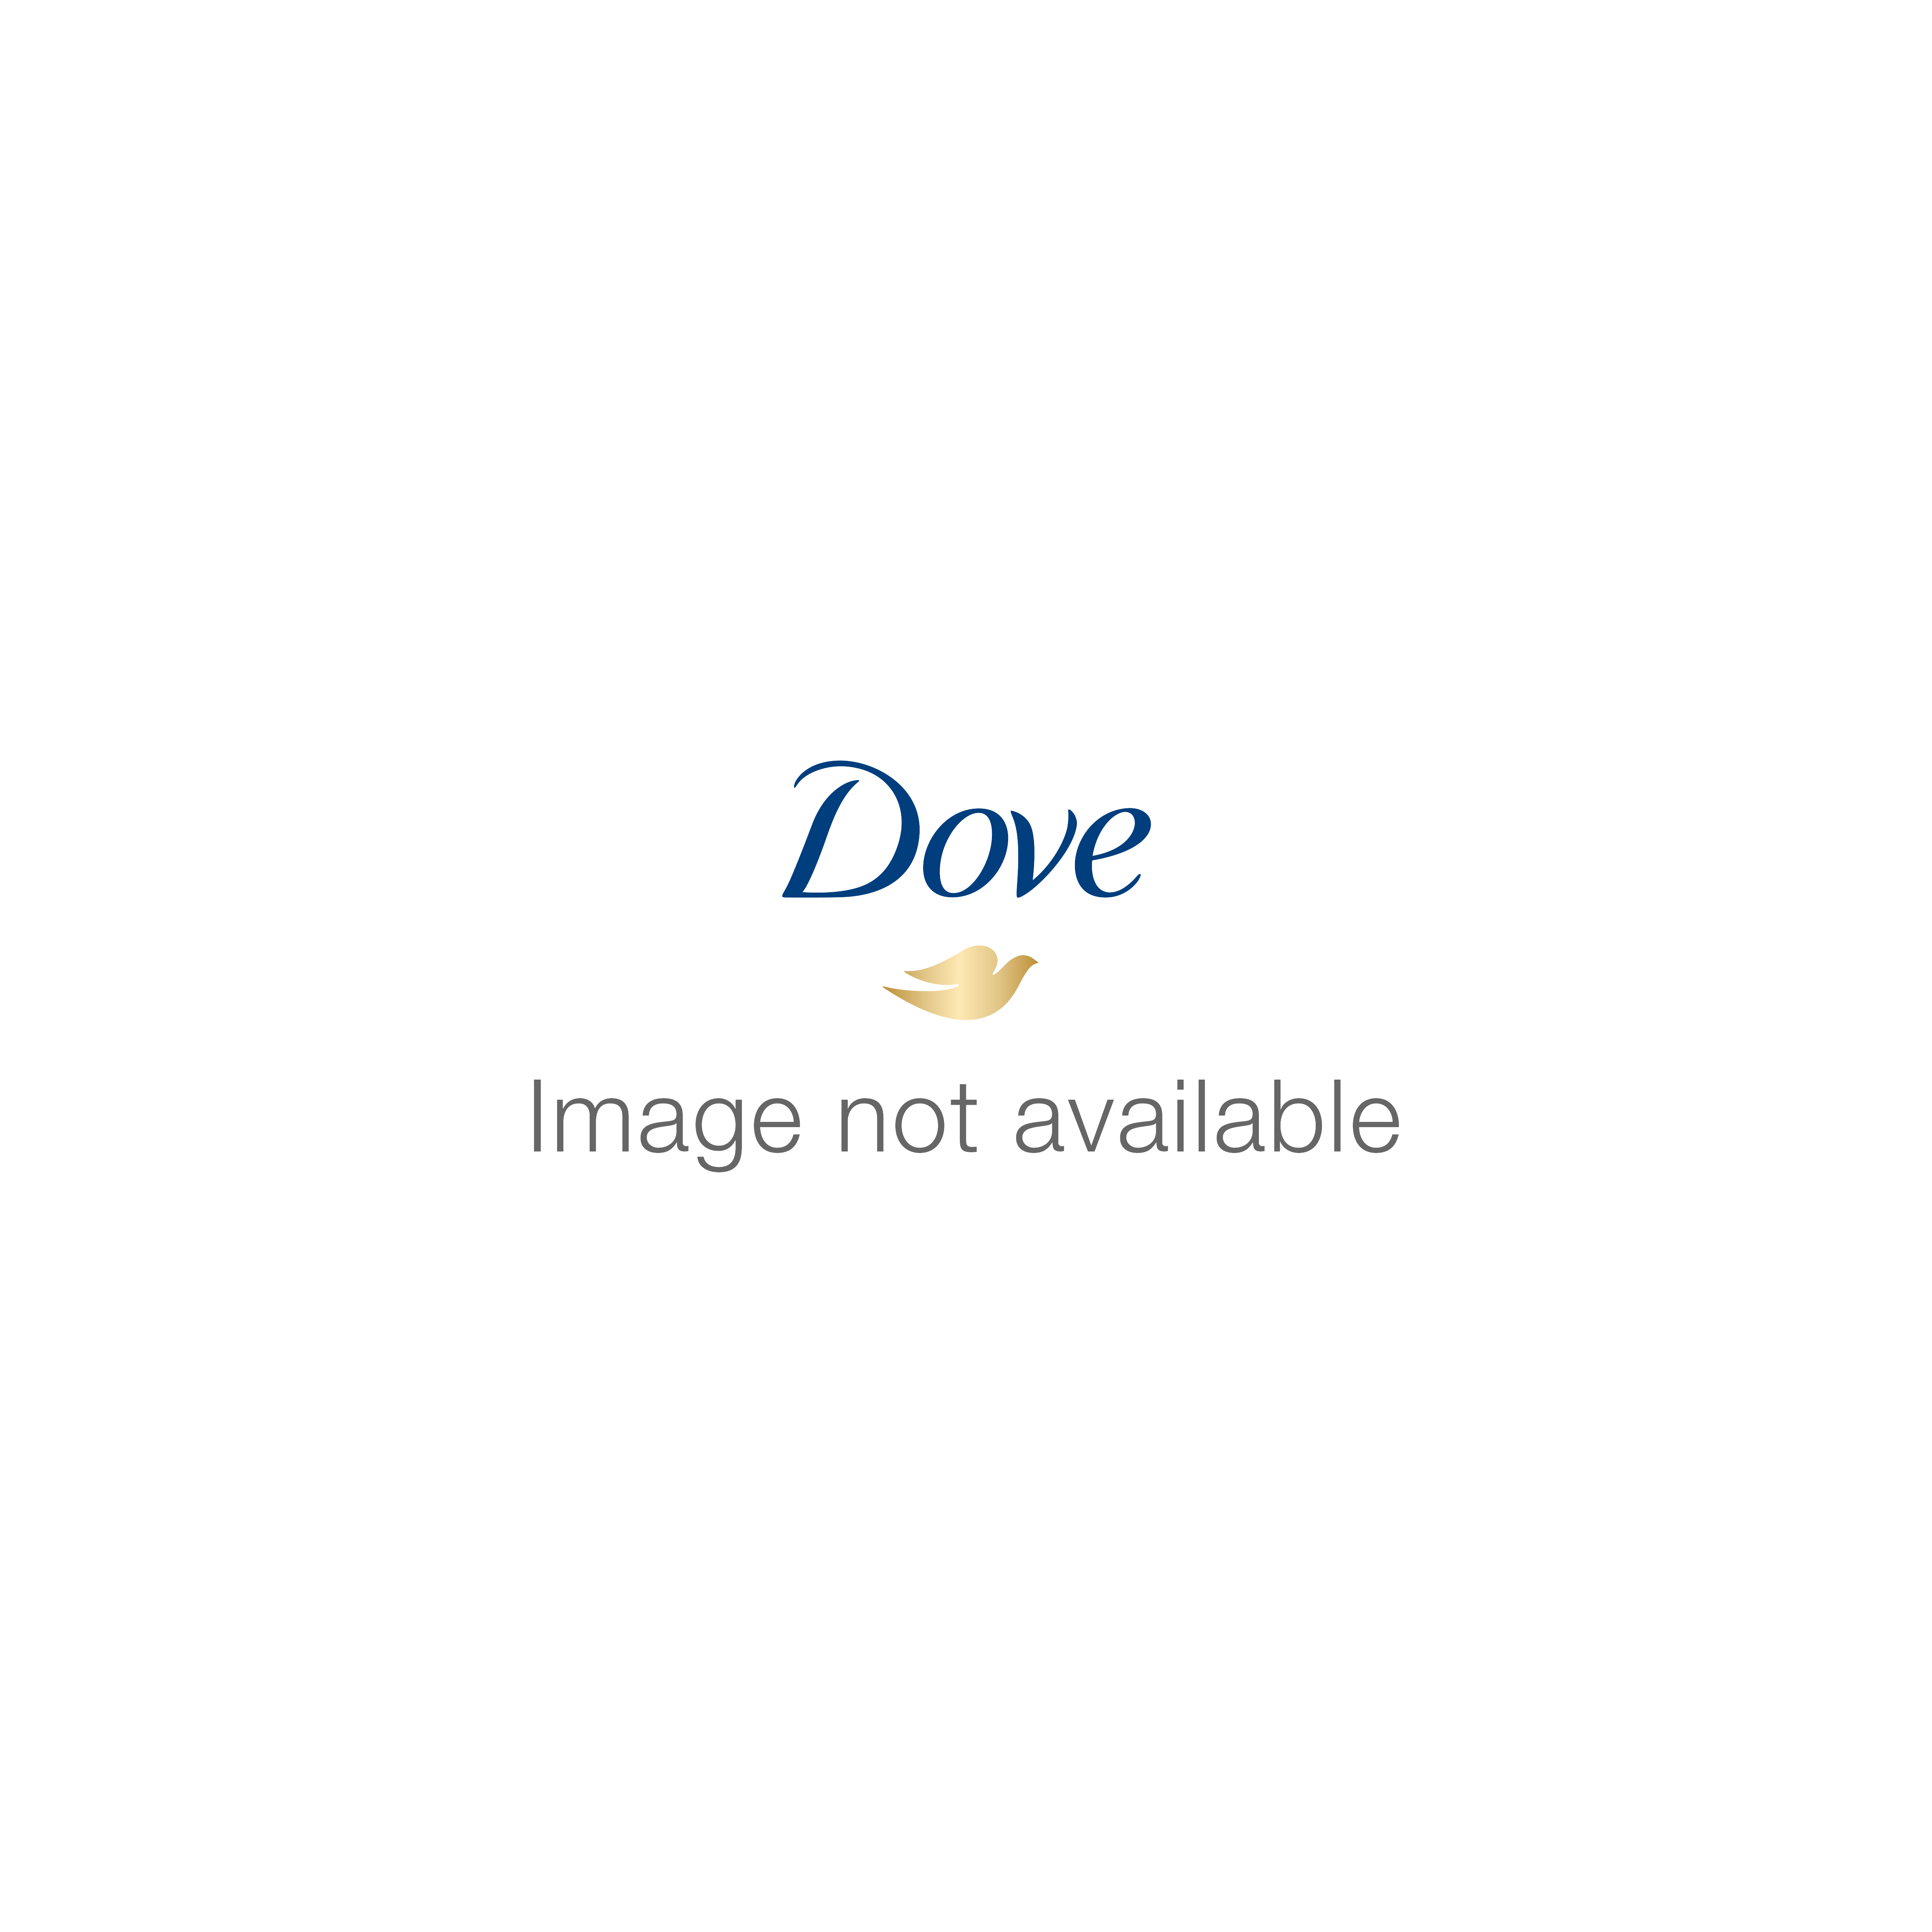 Dove Shampoo Logo - Dove shampoos to find your perfect shampoo match – Dove